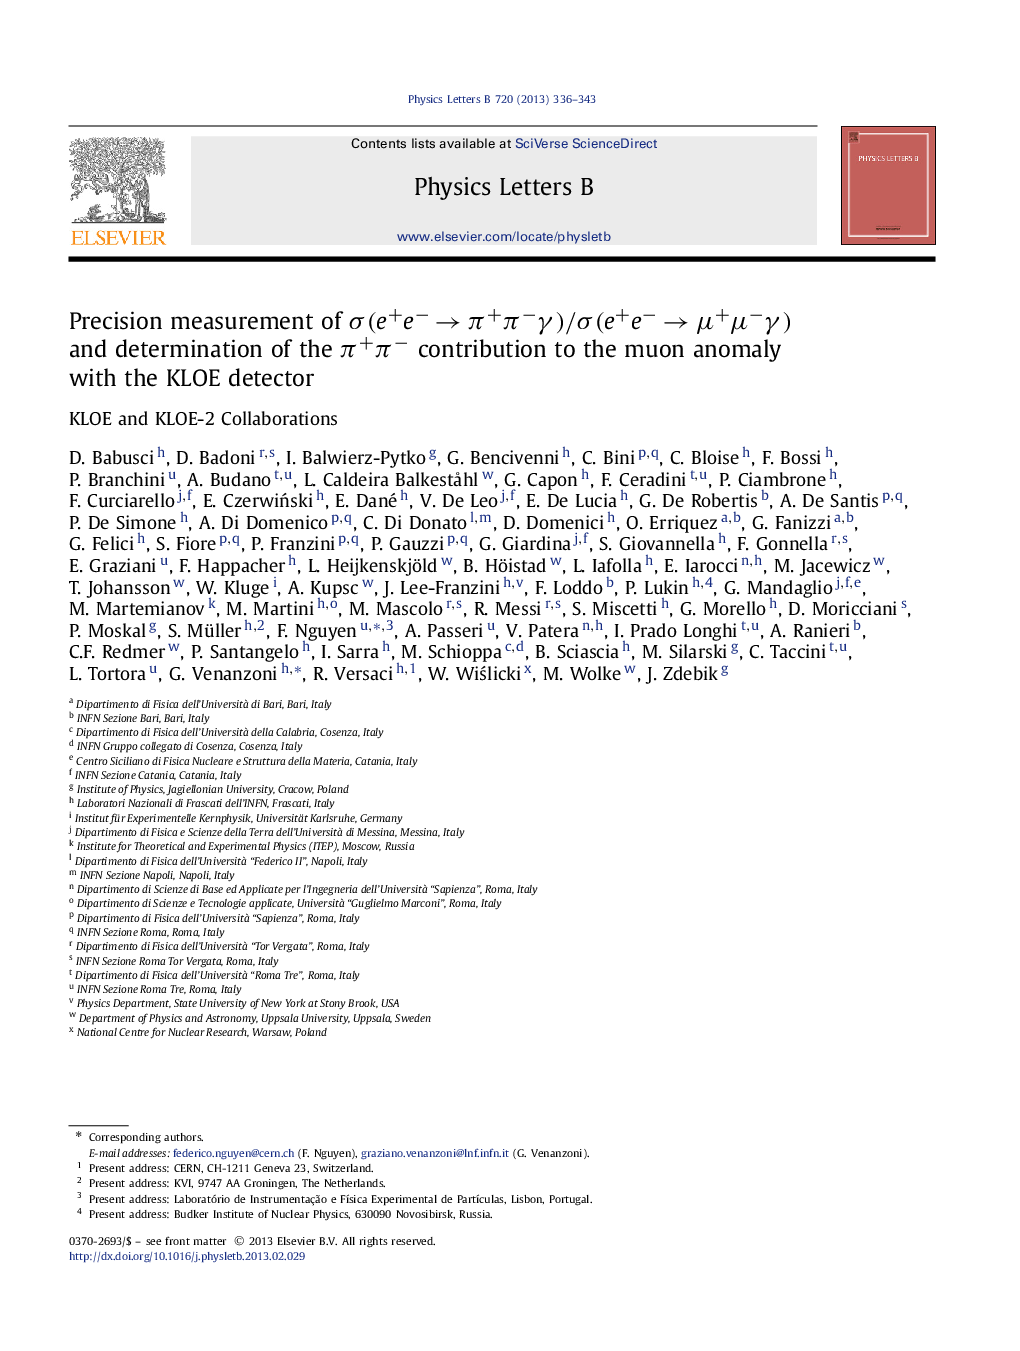 Precision measurement of Ï(e+eââÏ+ÏâÎ³)/Ï(e+eââÎ¼+Î¼âÎ³) and determination of the Ï+Ïâ contribution to the muon anomaly with the KLOE detector